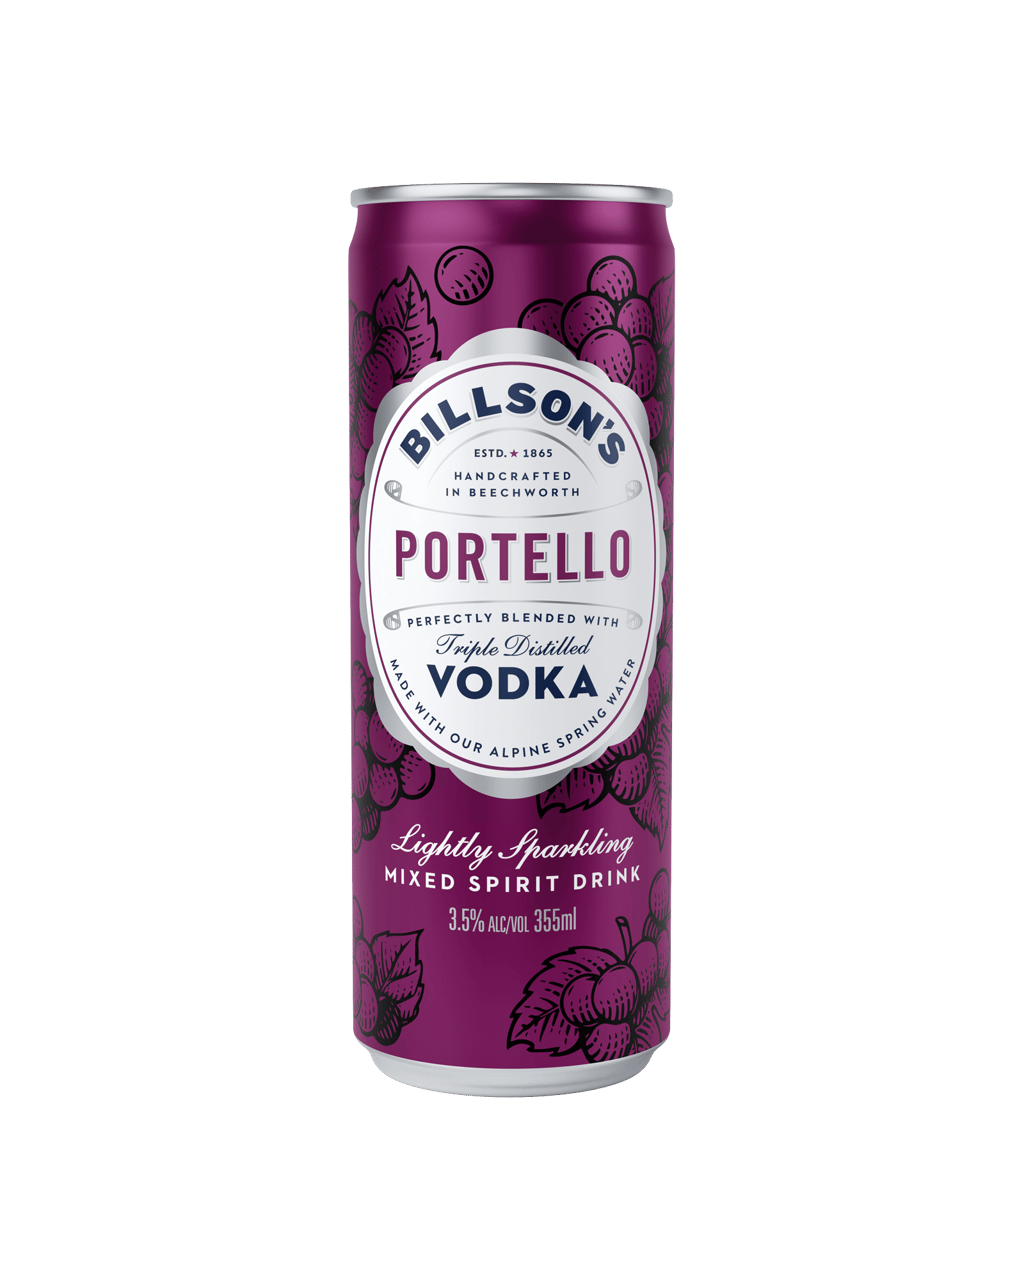 Image - Vodka with Portello by Billson's